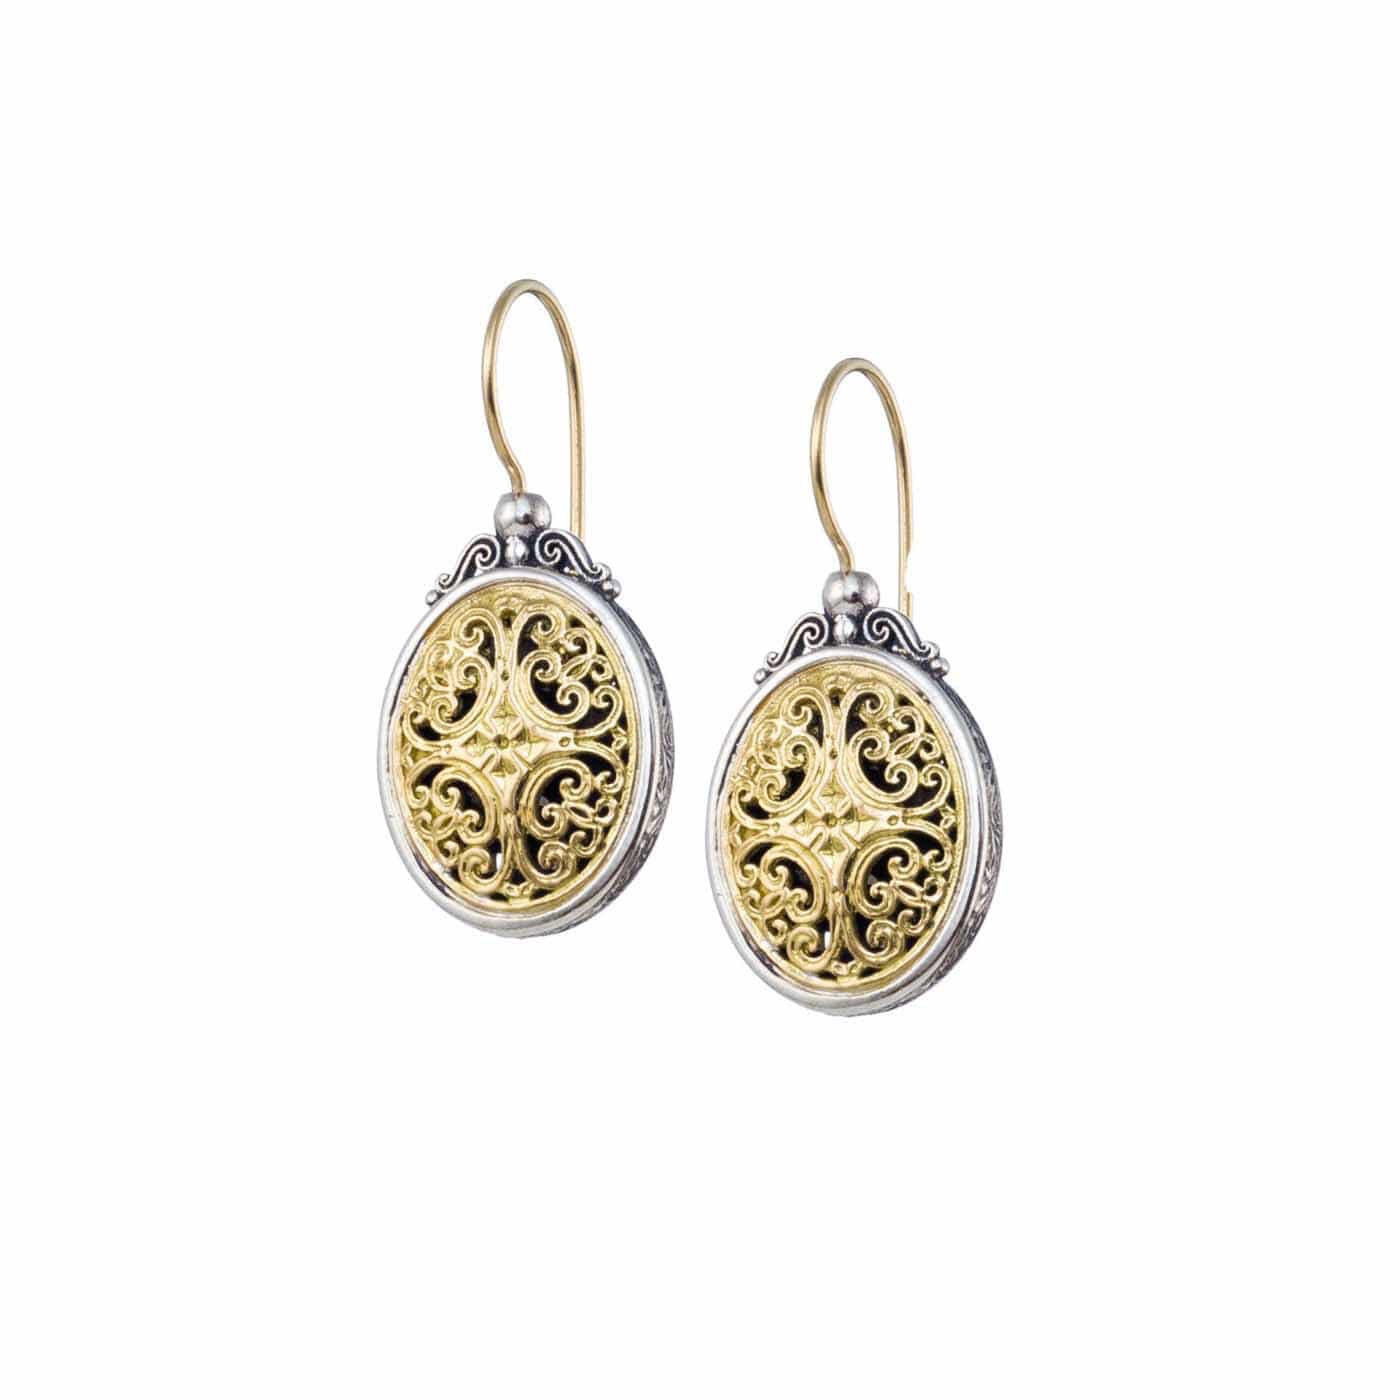 Mediterranean earrings in 18K Gold and Sterling Silver - Gerochristo ...